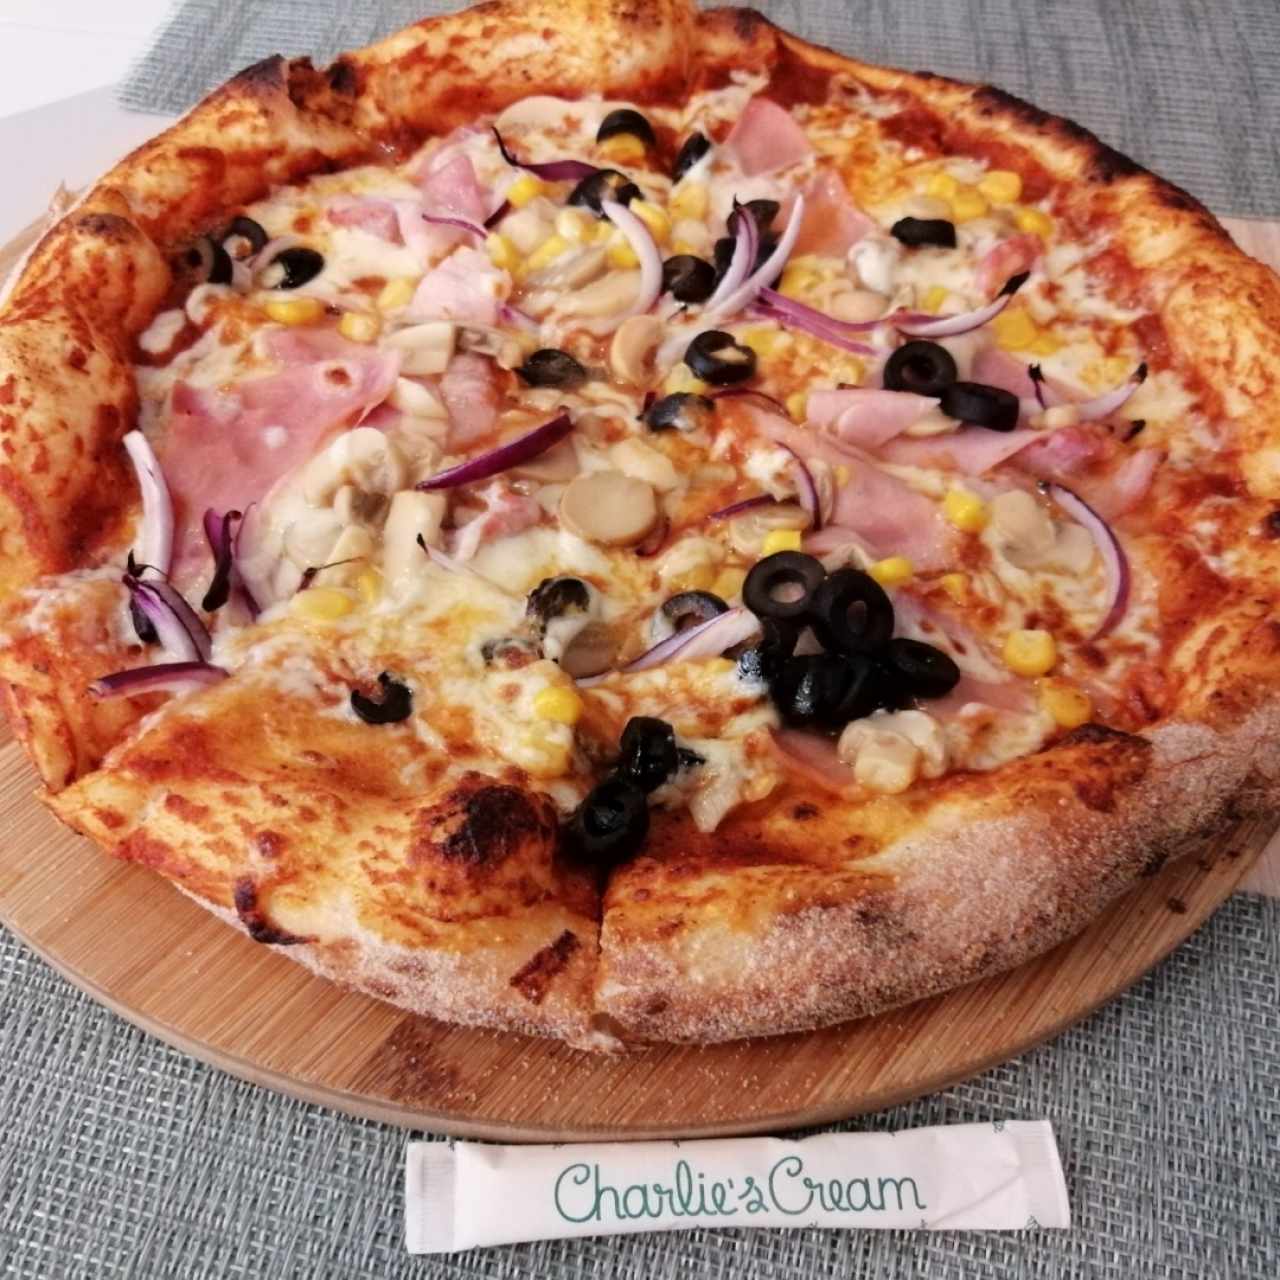 Pizza Charlie's Cream